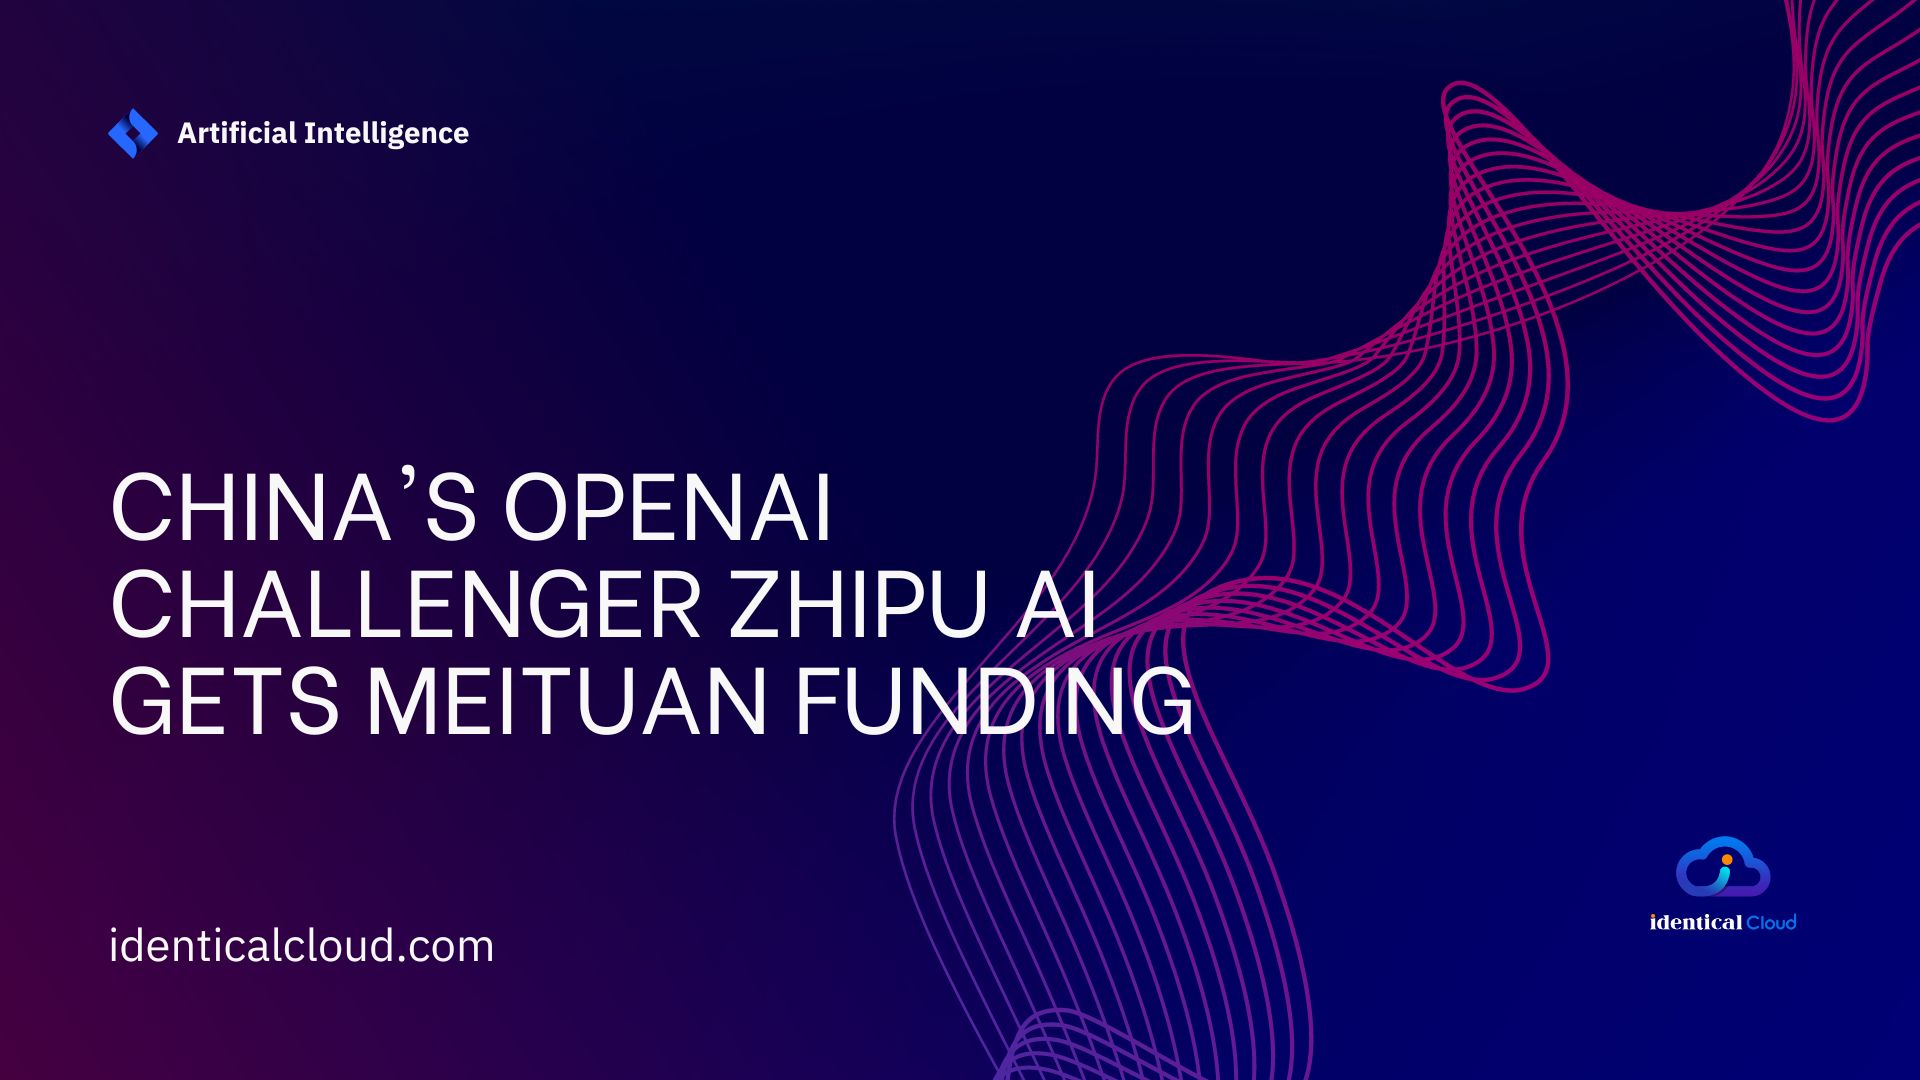 China OpenAI challenger Zhipu AI gets Meituan funding - identicalcloud.com